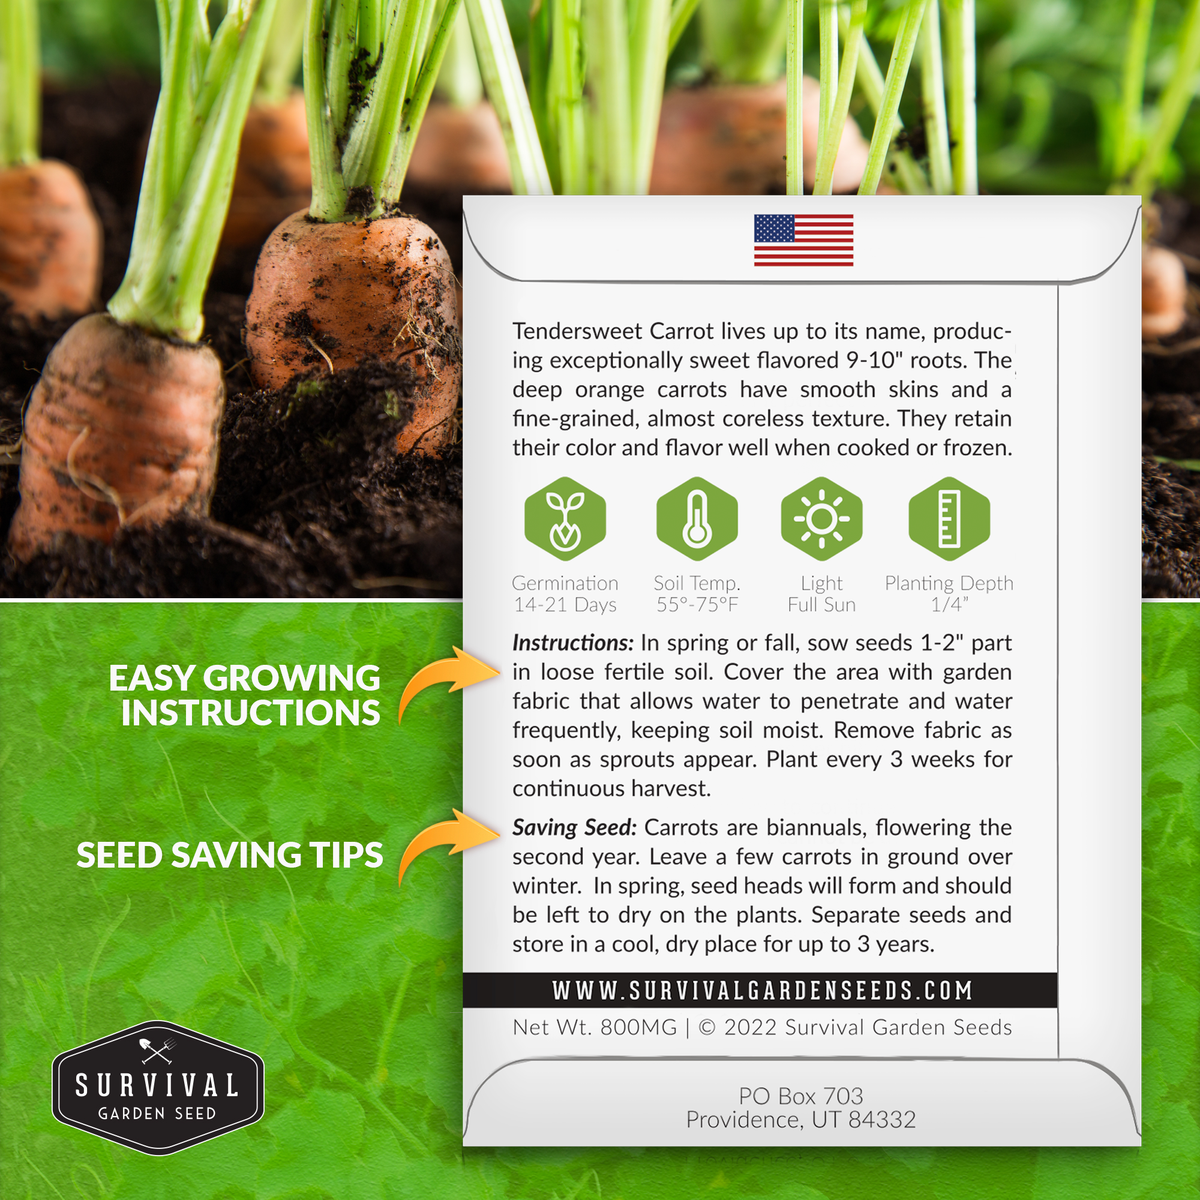 Tendersweet Carrot seed planting instructions